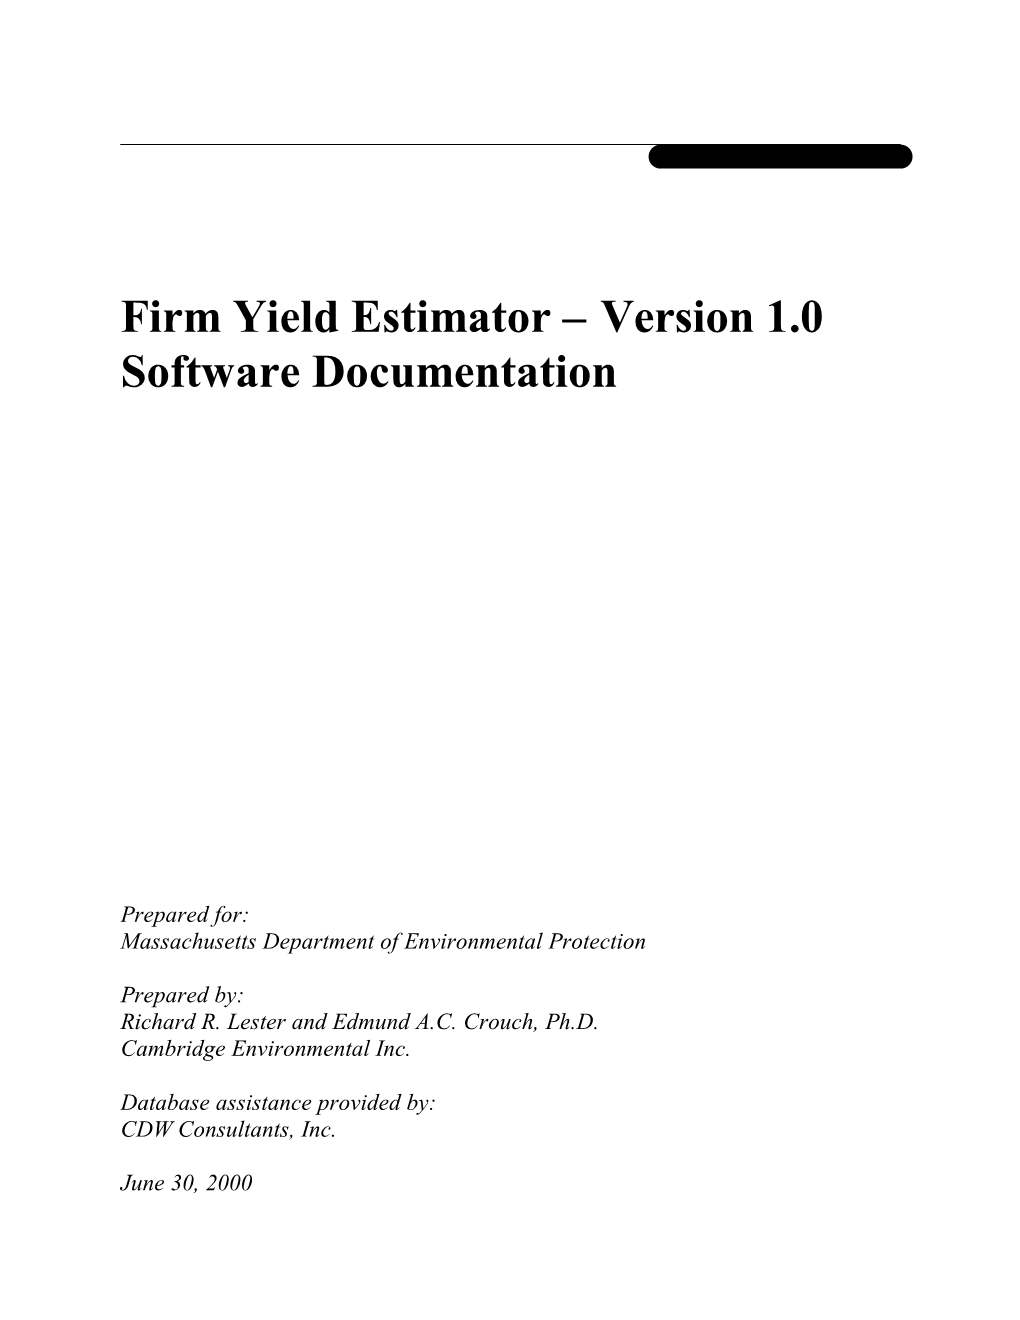 Firm Yield Estimator – Version 1.0 Software Documentation